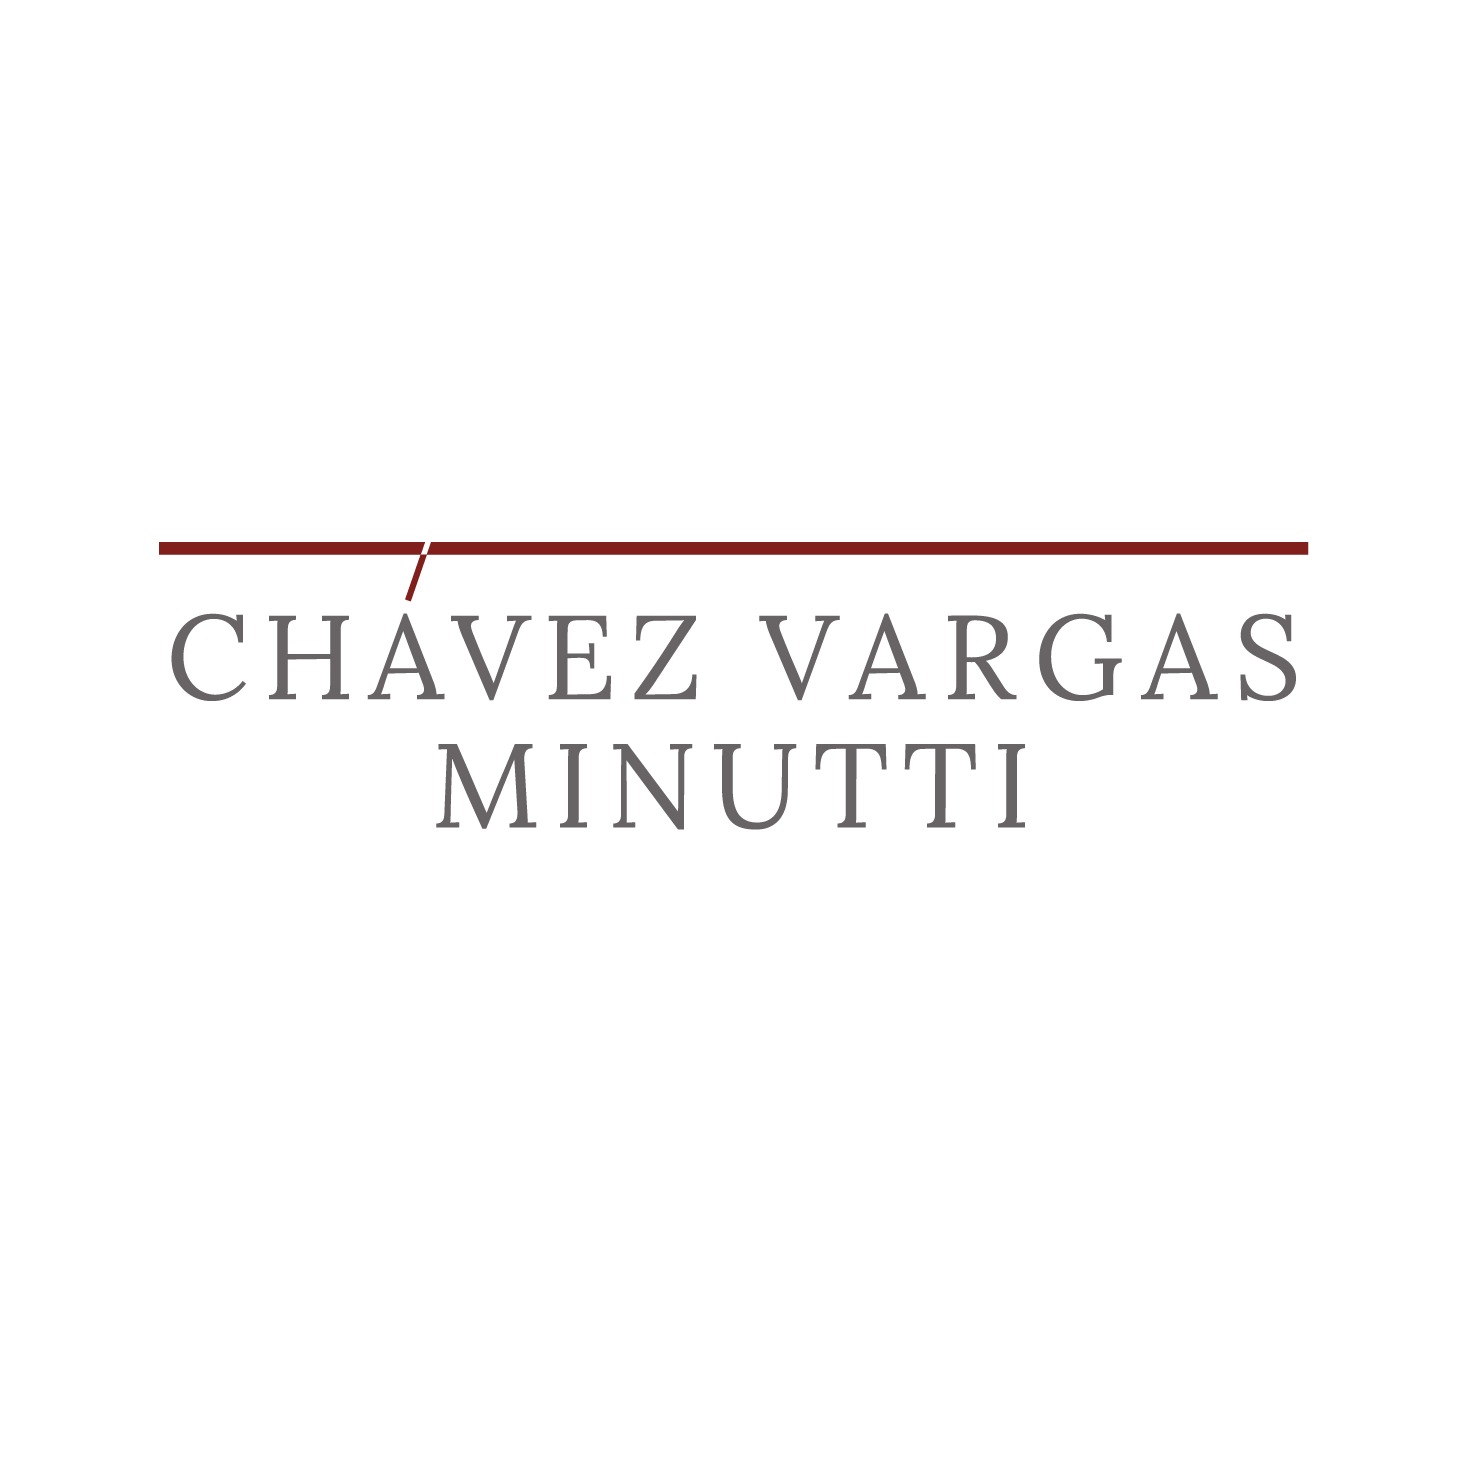 Chavez Vargas Minutti